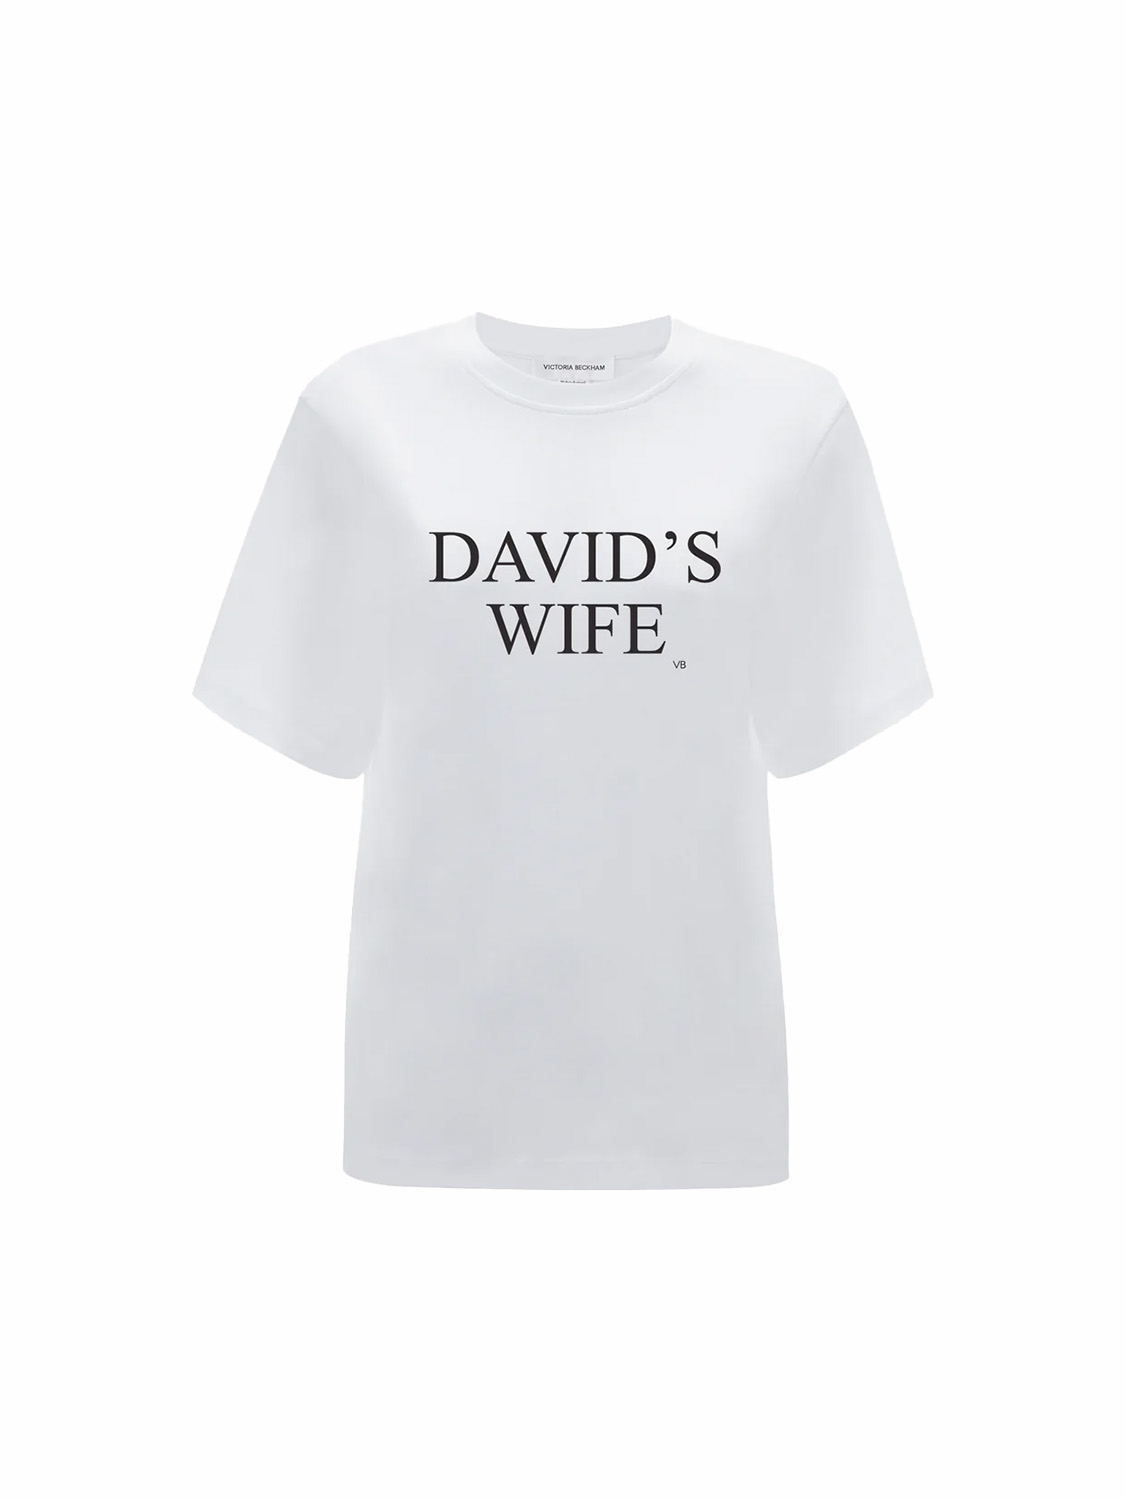 Davids Wife - Slogan Tee